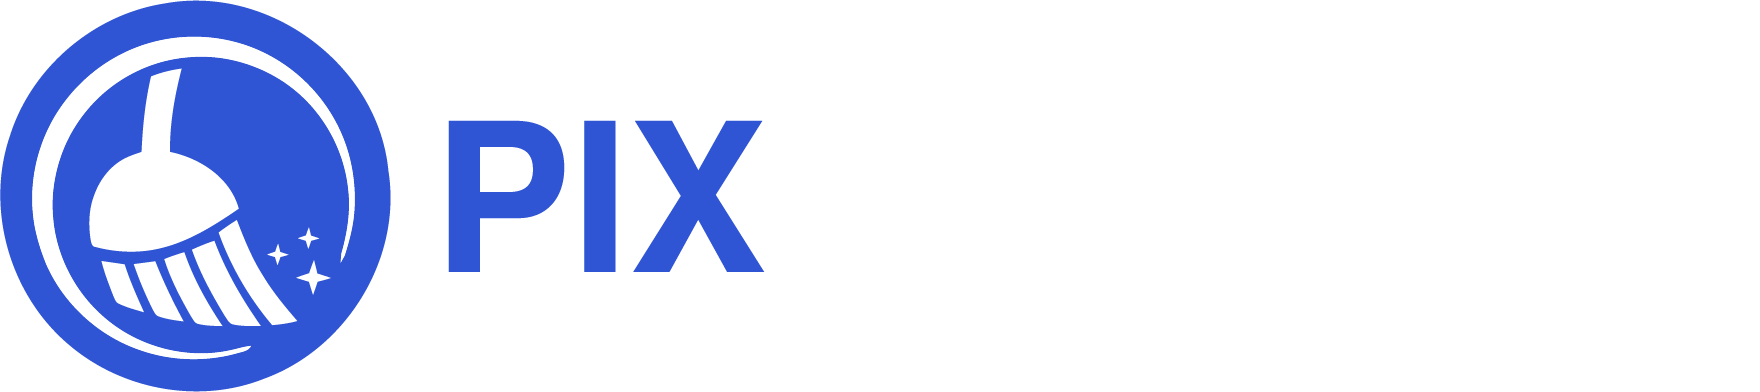 pixcleaner_logo_website